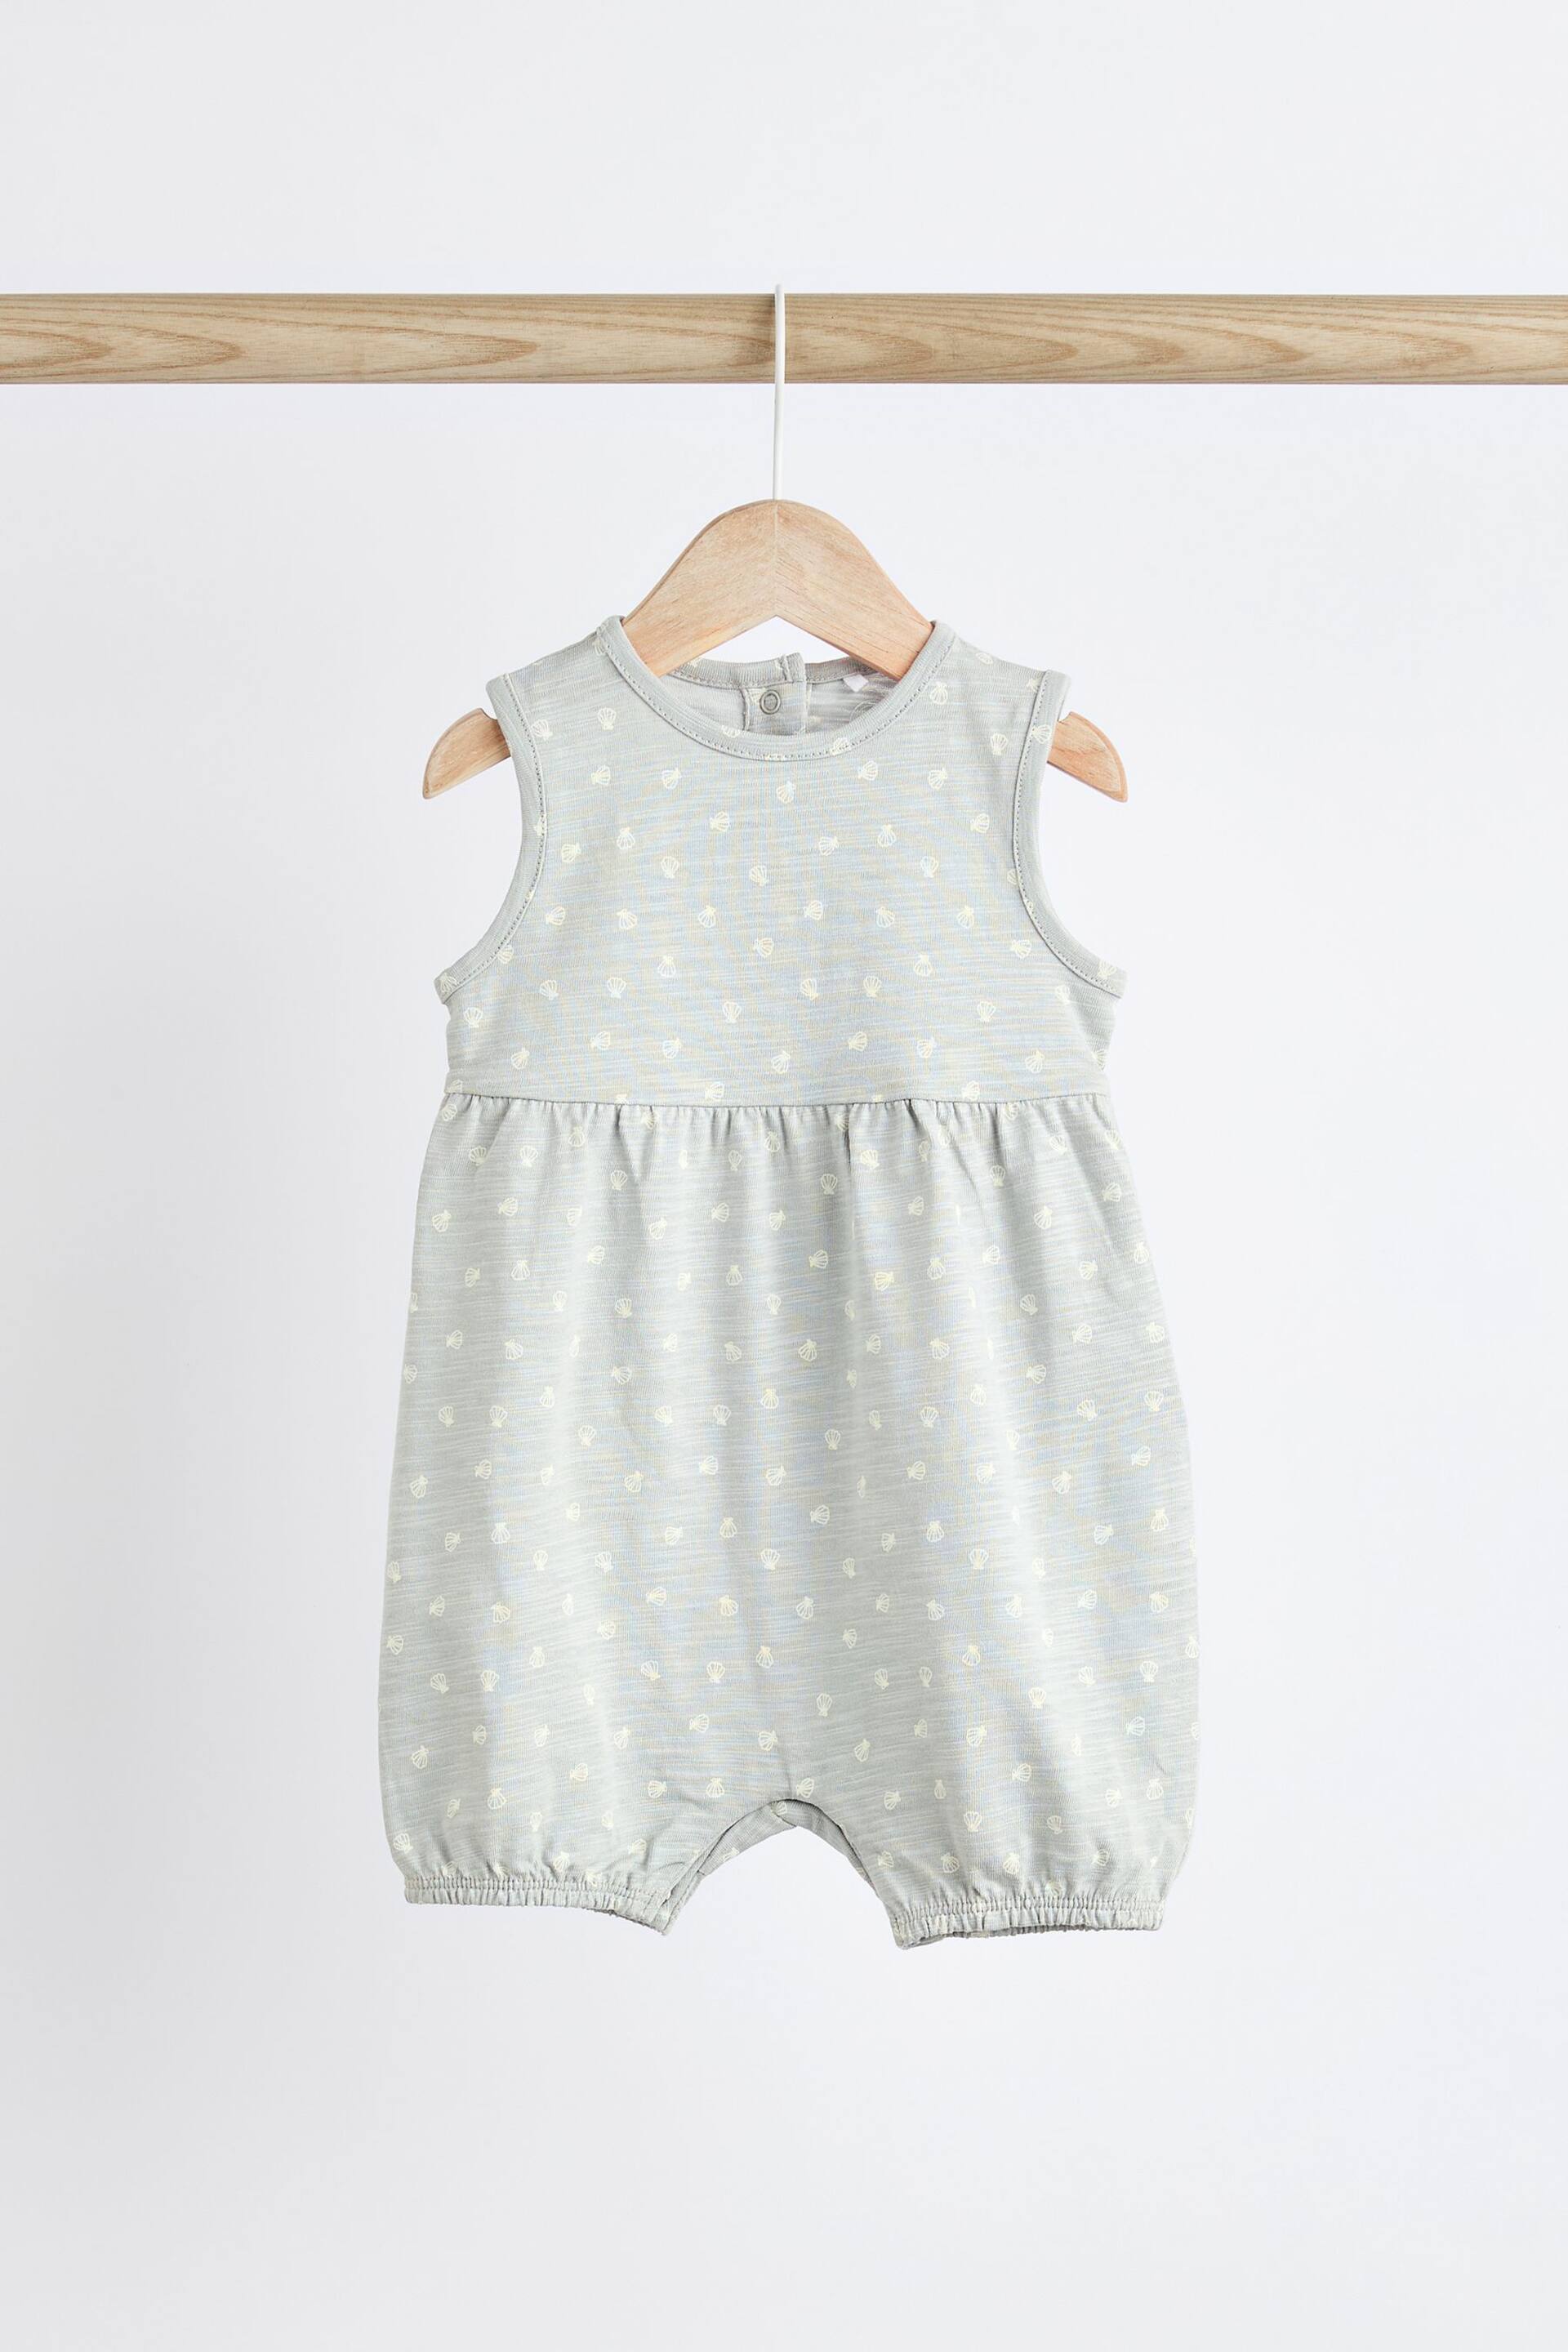 Grey Seashell Print Baby Vest Rompers 3 Pack - Image 6 of 10